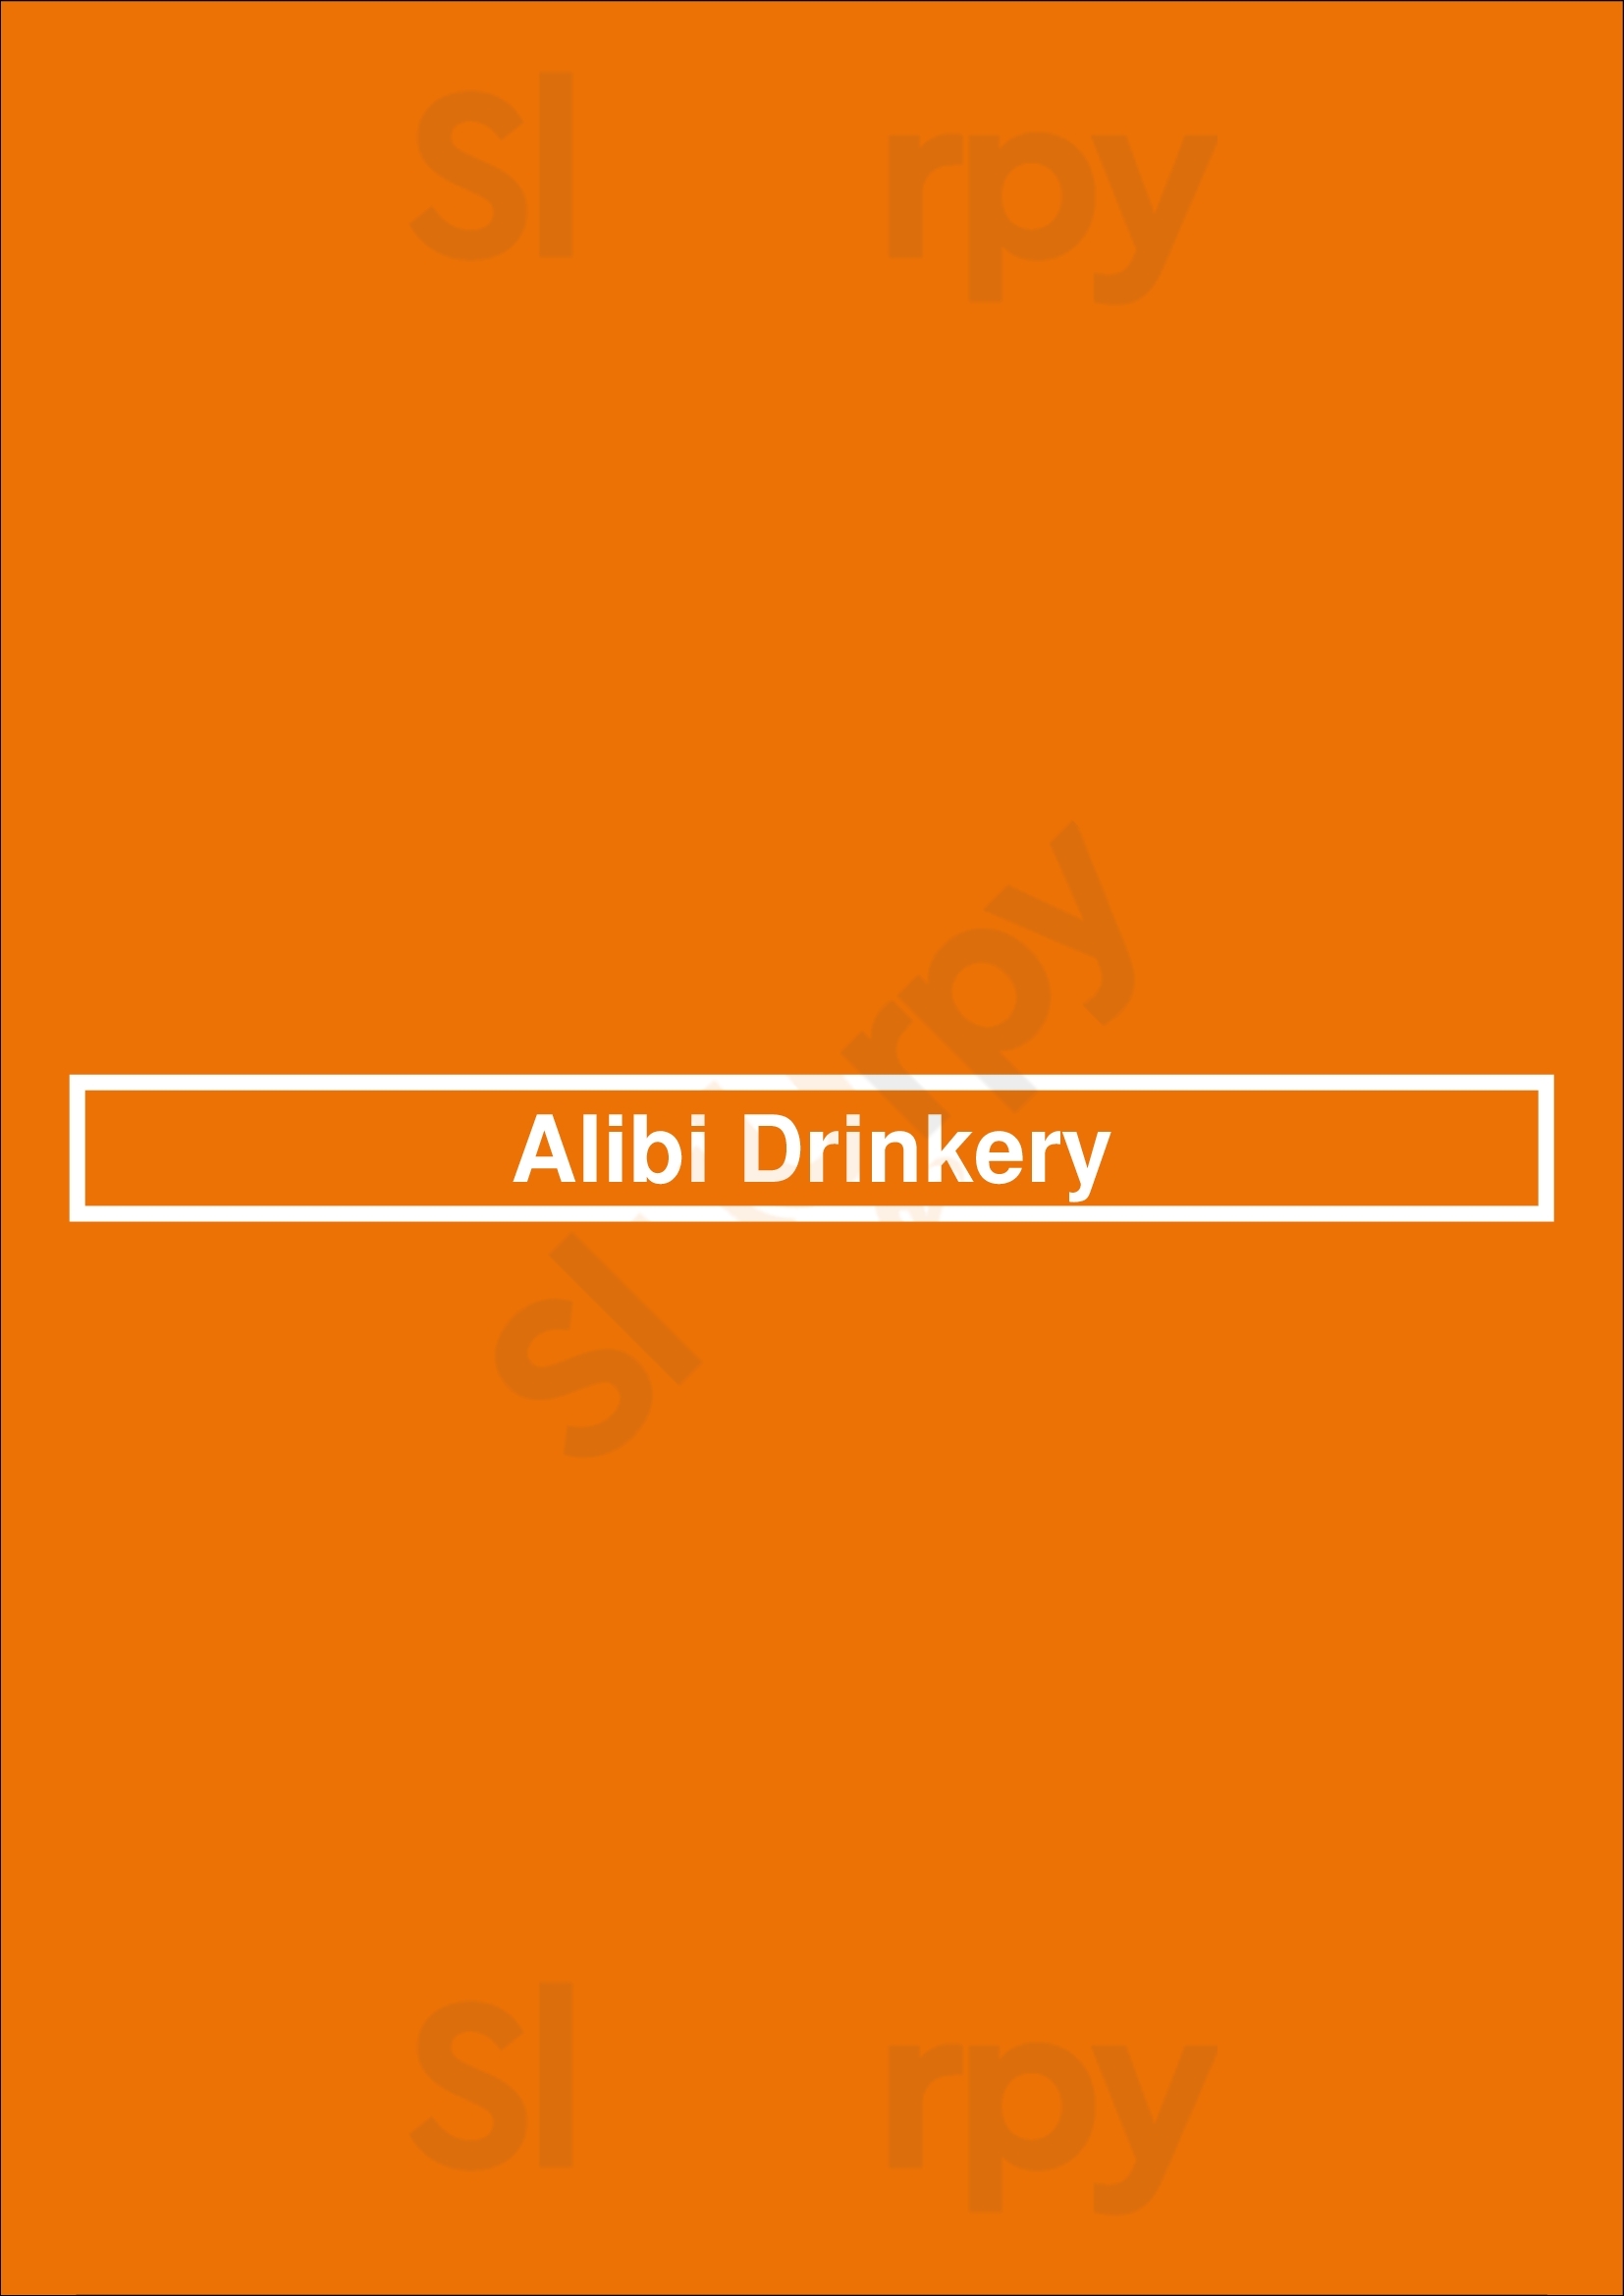 Alibi Drinkery Lakeville Menu - 1